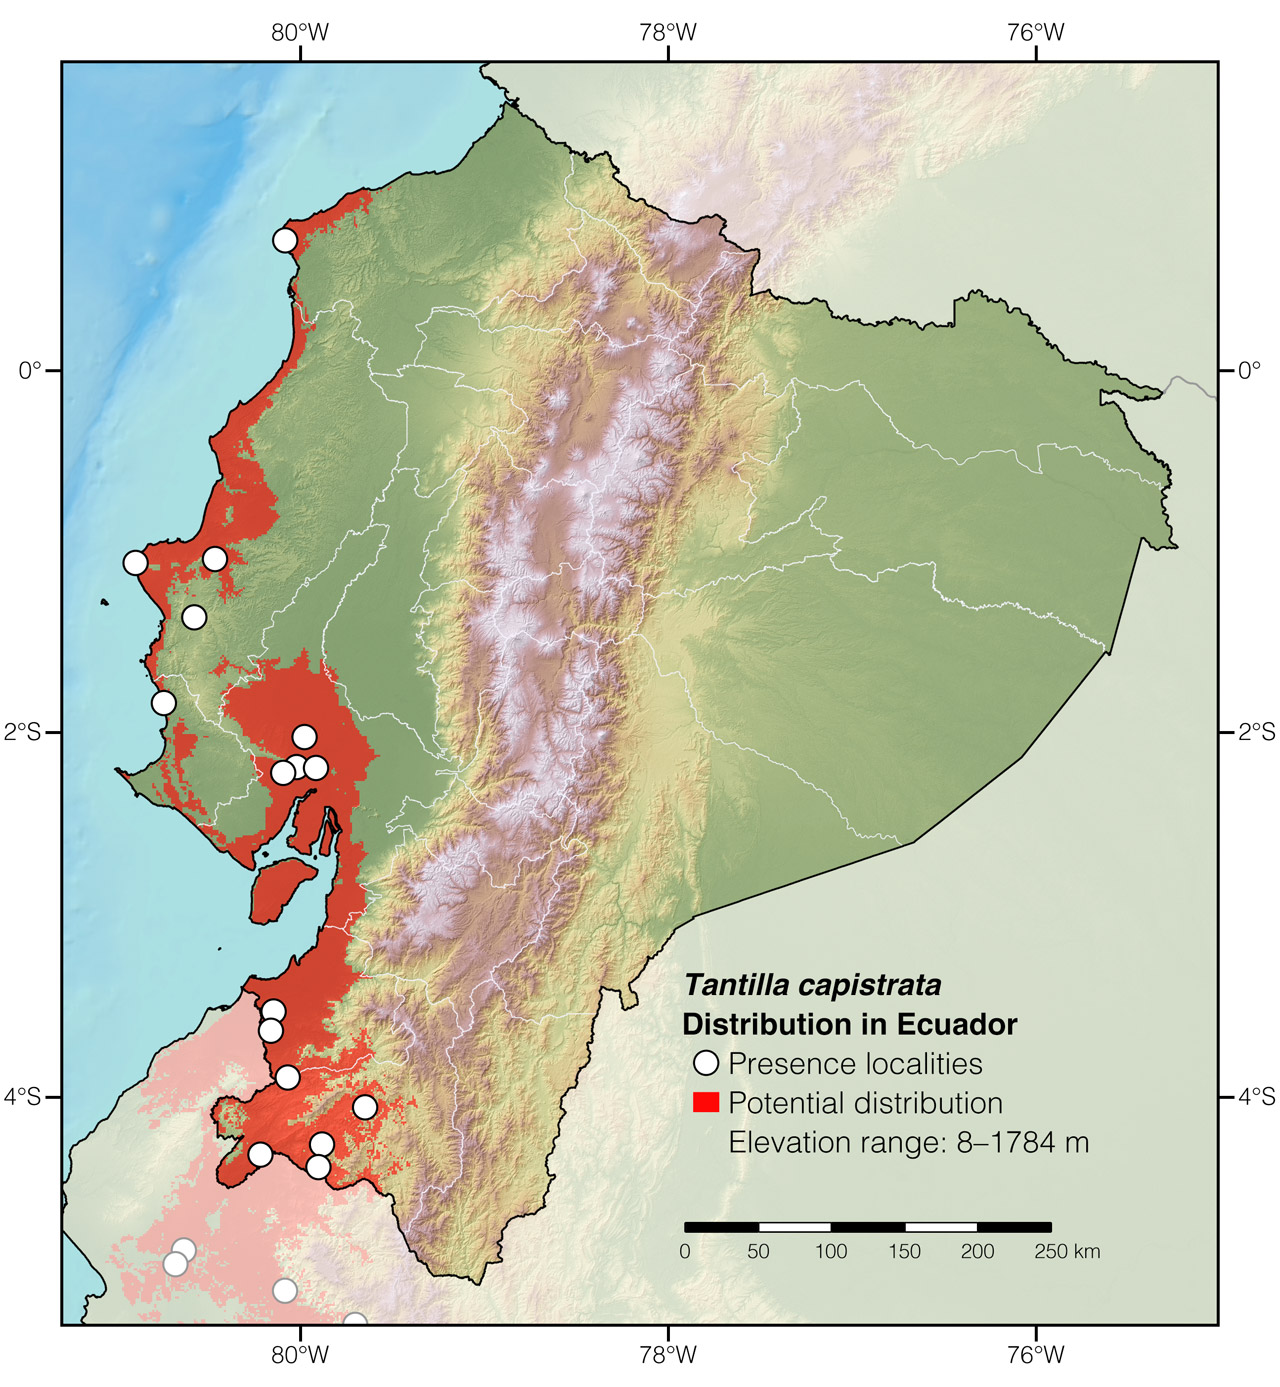 Distribution of Tantilla capistrata in Ecuador